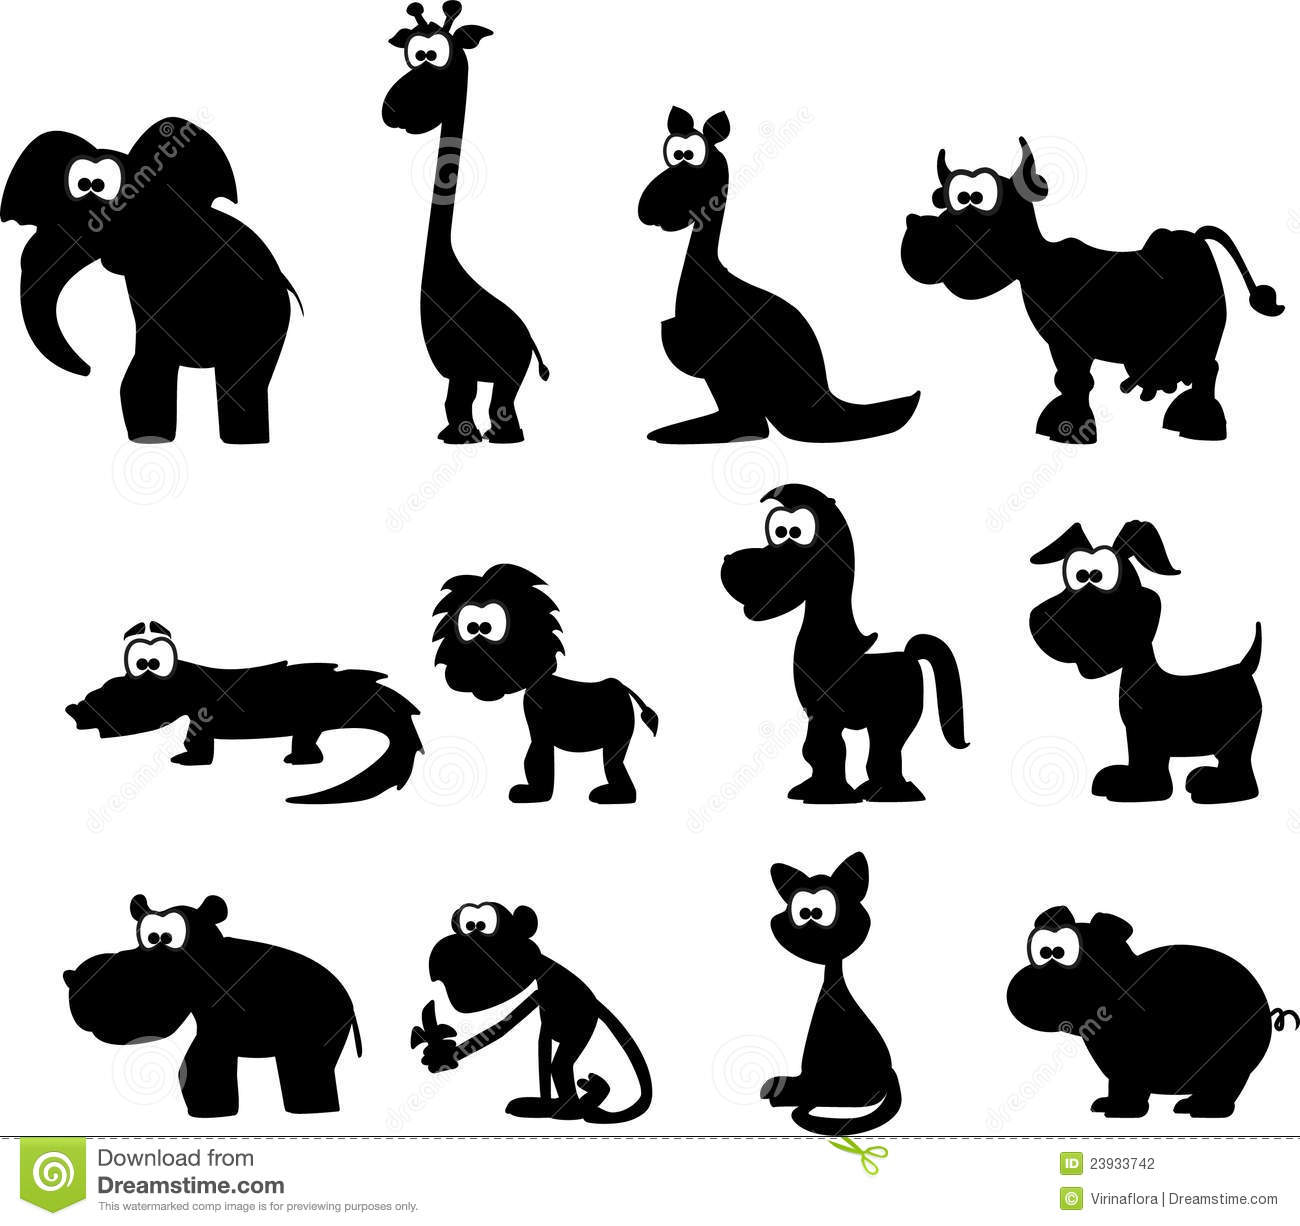 Cartoon Animal Silhouettes